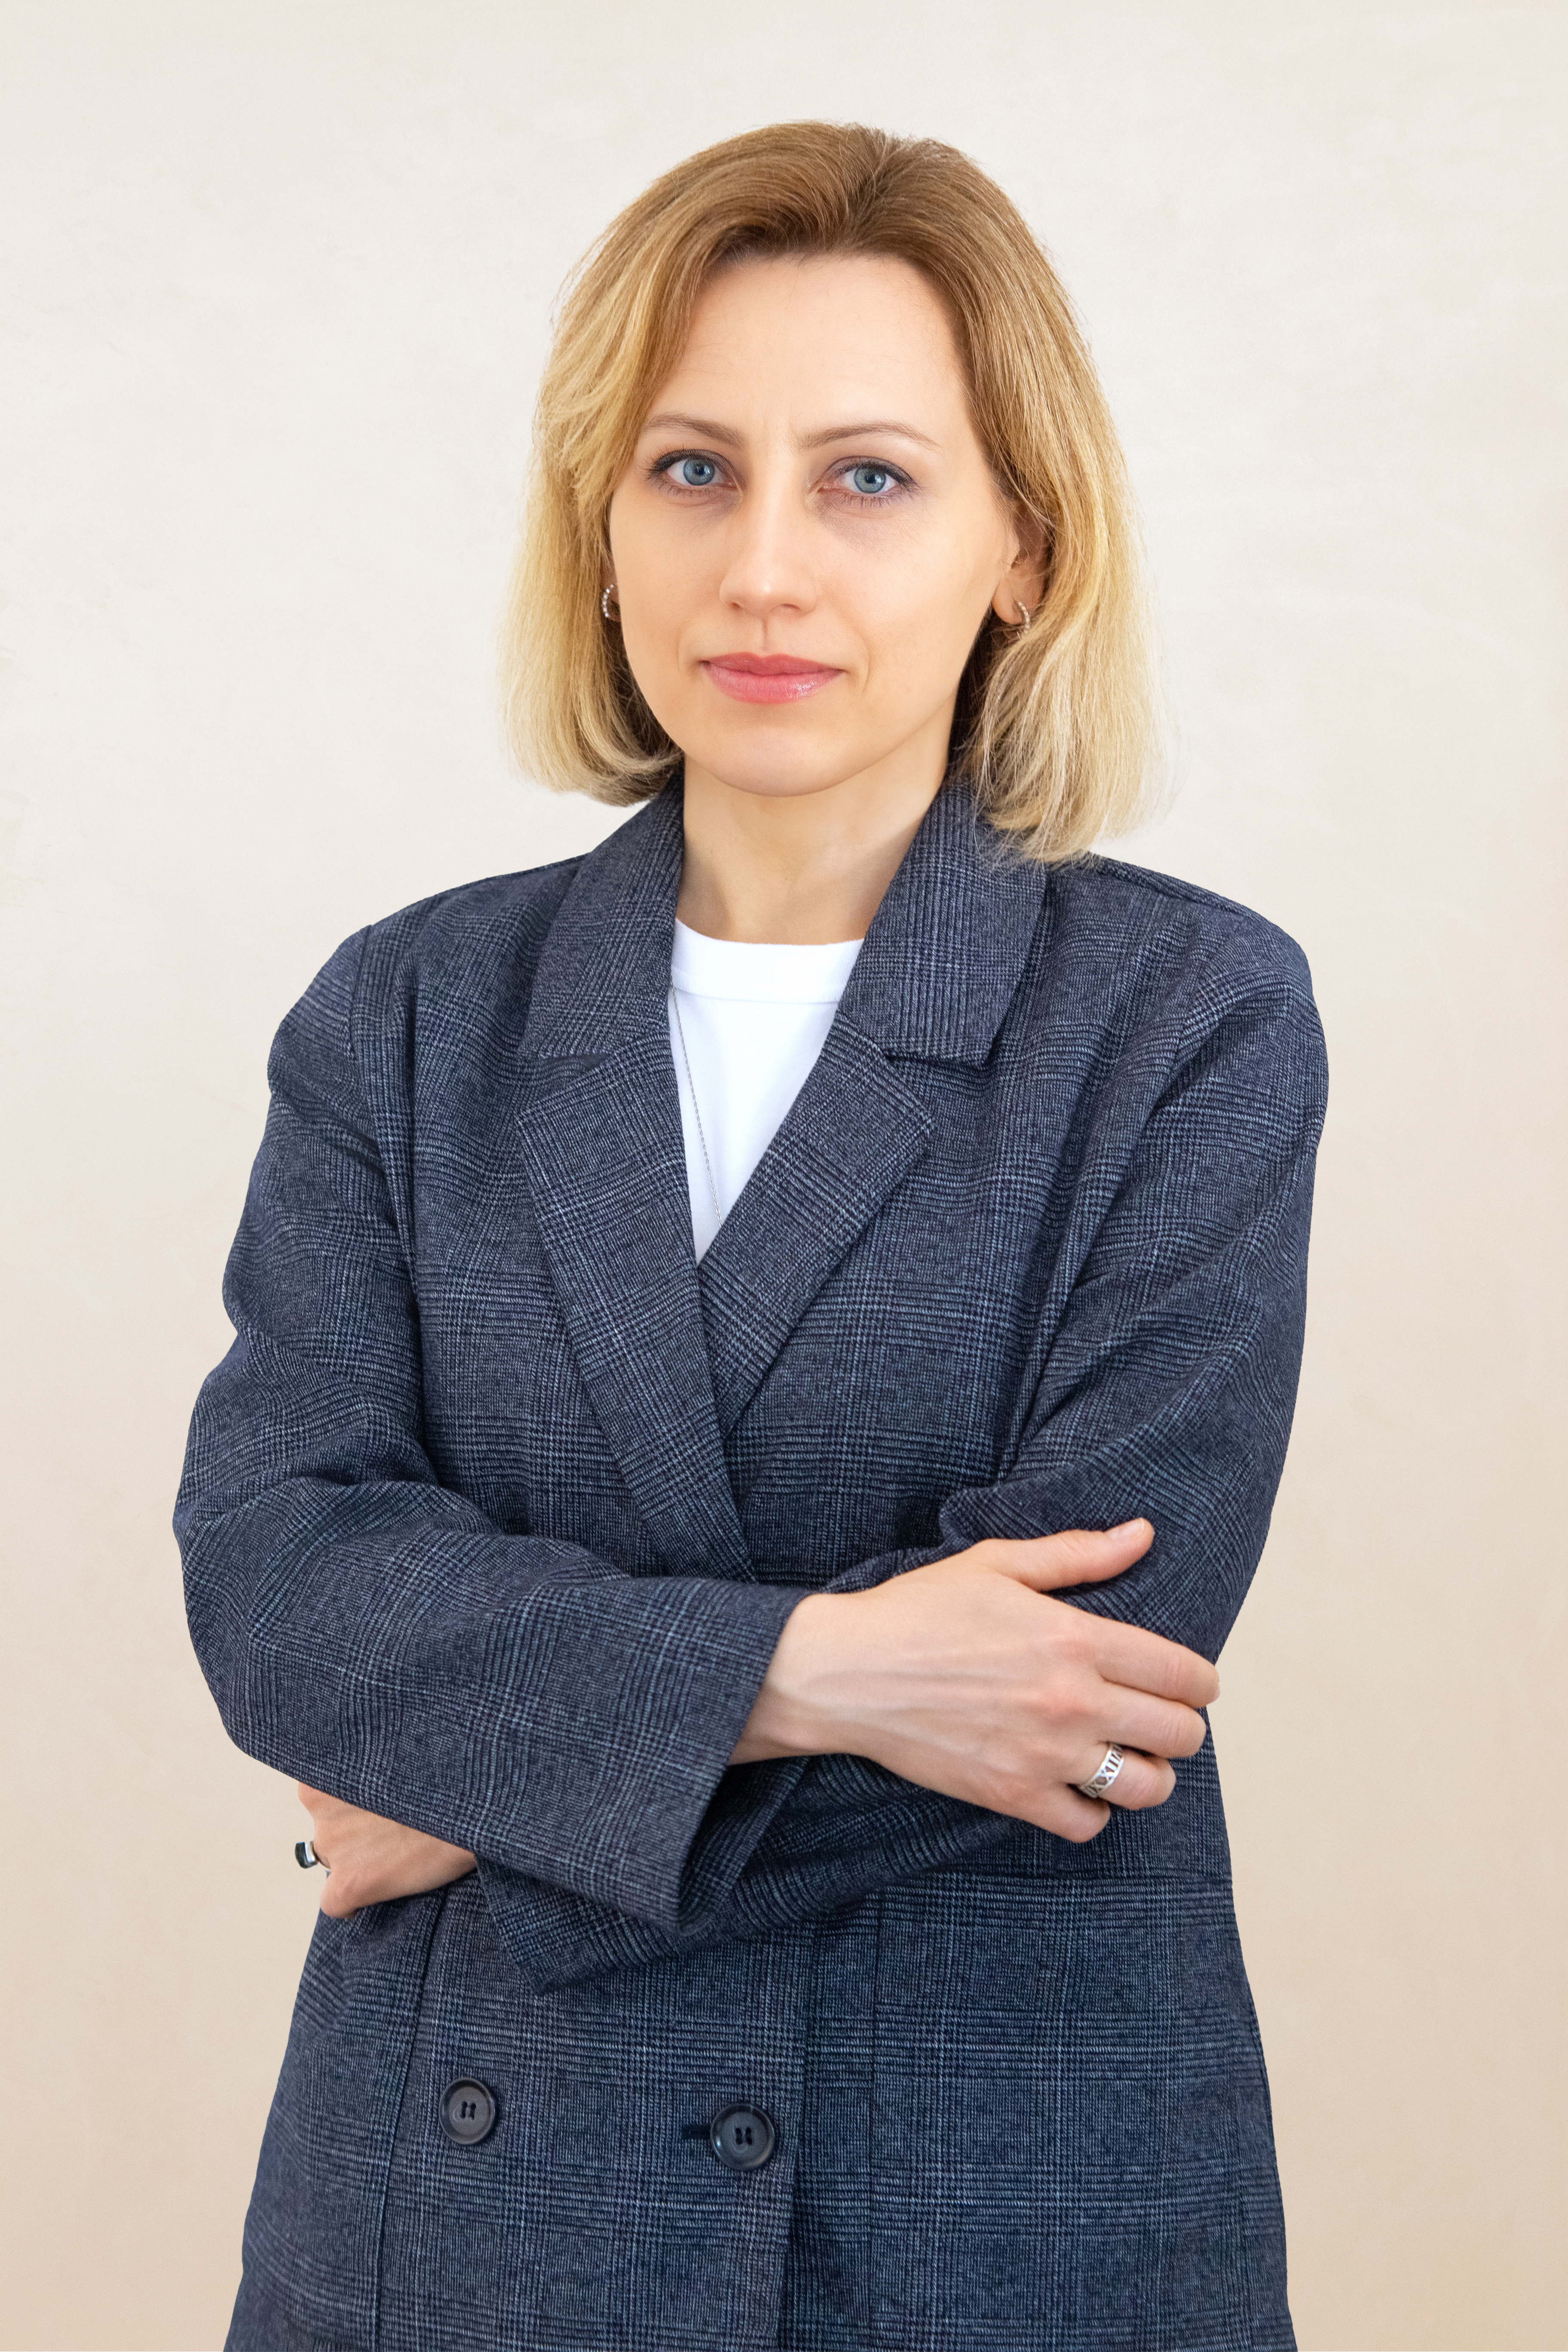 Irina Baranova - A.Zalesov & Partners Patent & Law Firm